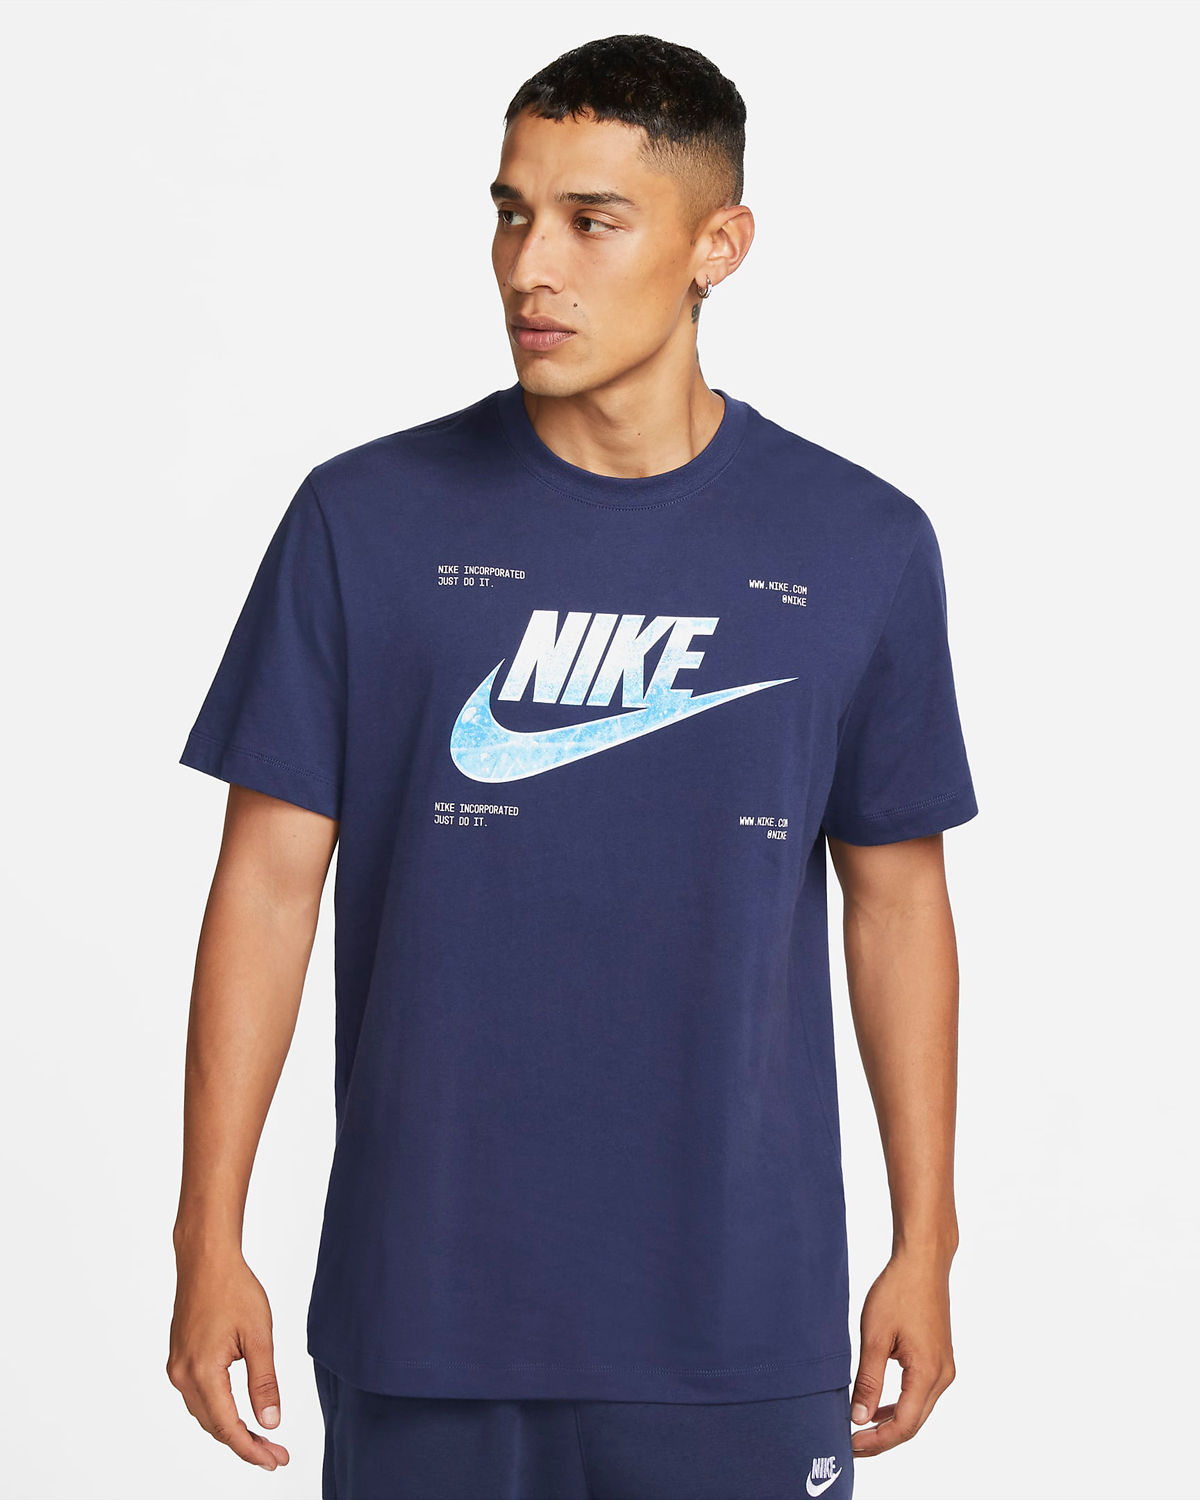 Nike-T-Shirt-Midnigt-Navy